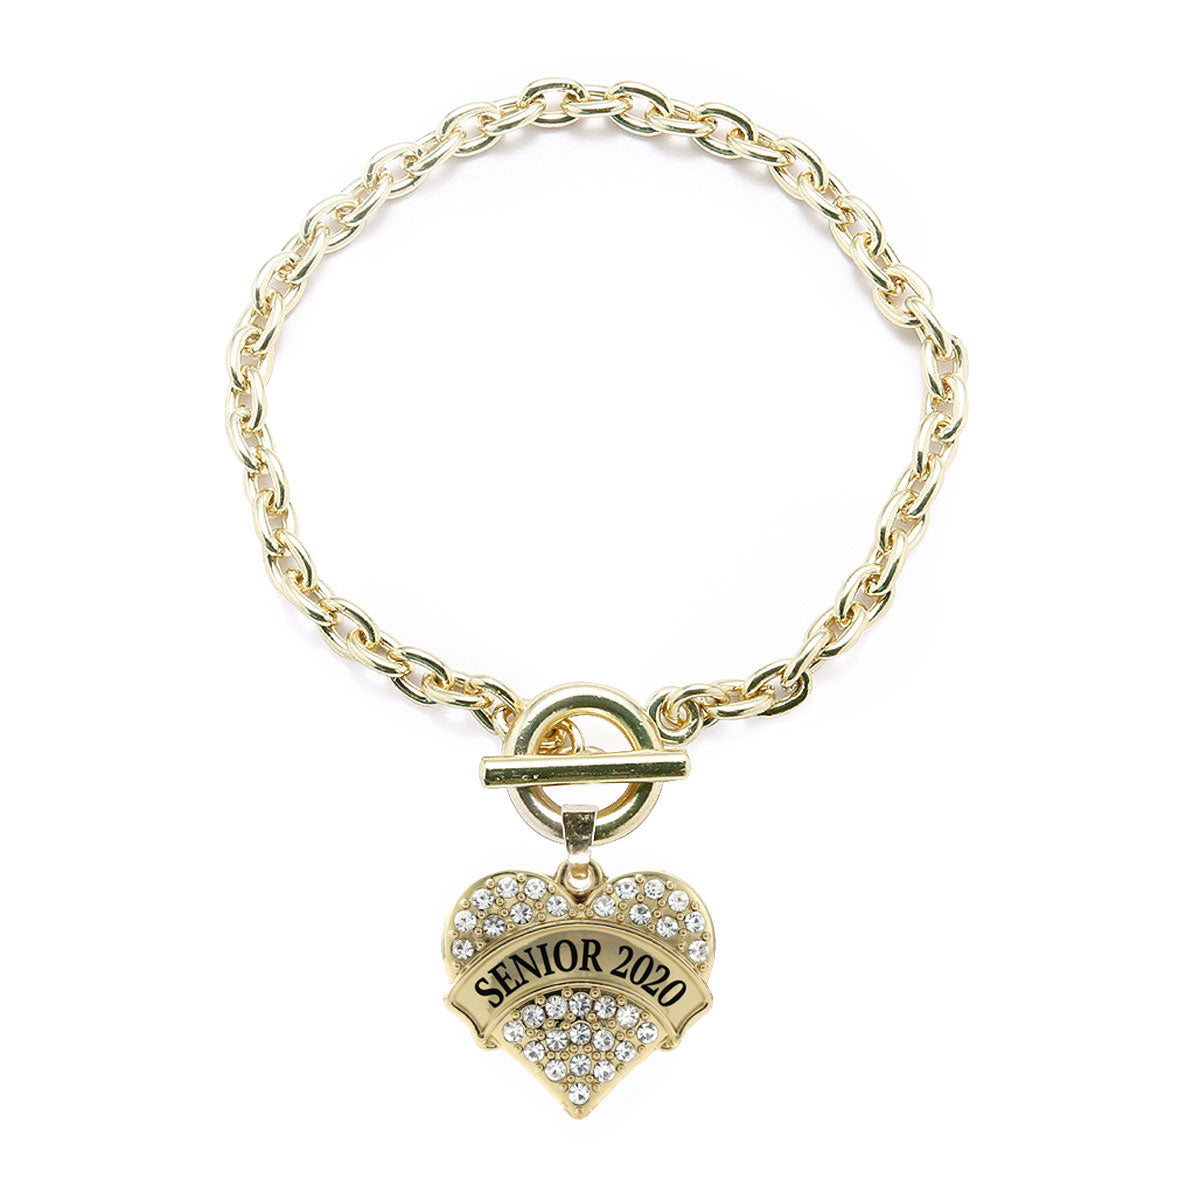 Gold Senior 2020 Pave Heart Charm Toggle Bracelet